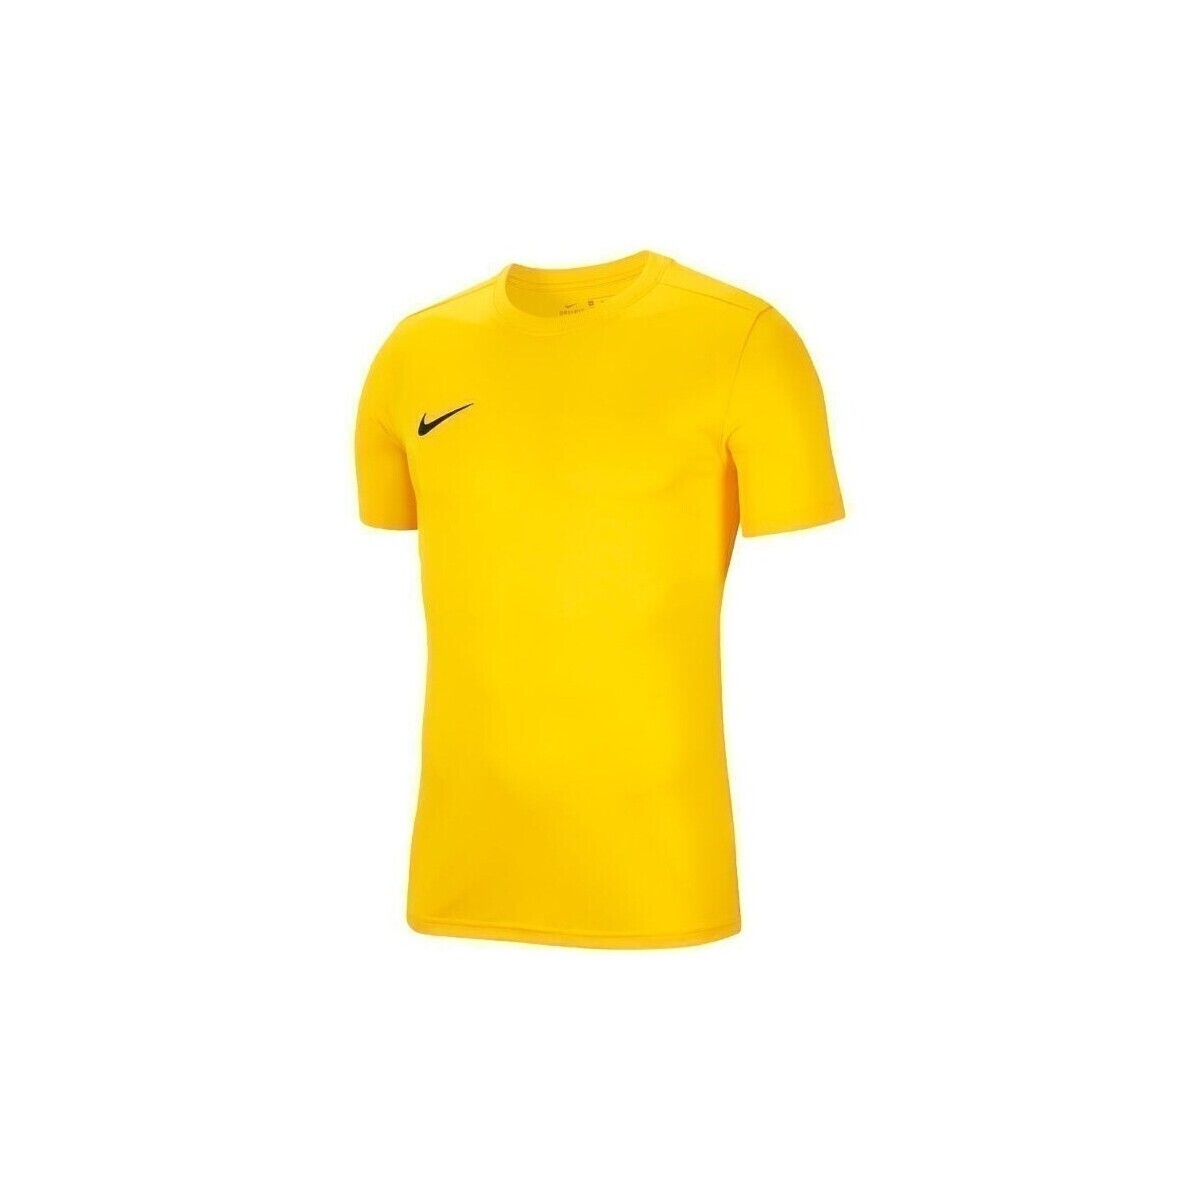 Textil Rapaz T-Shirt mangas curtas Nike JR Dry Park Vii Amarelo